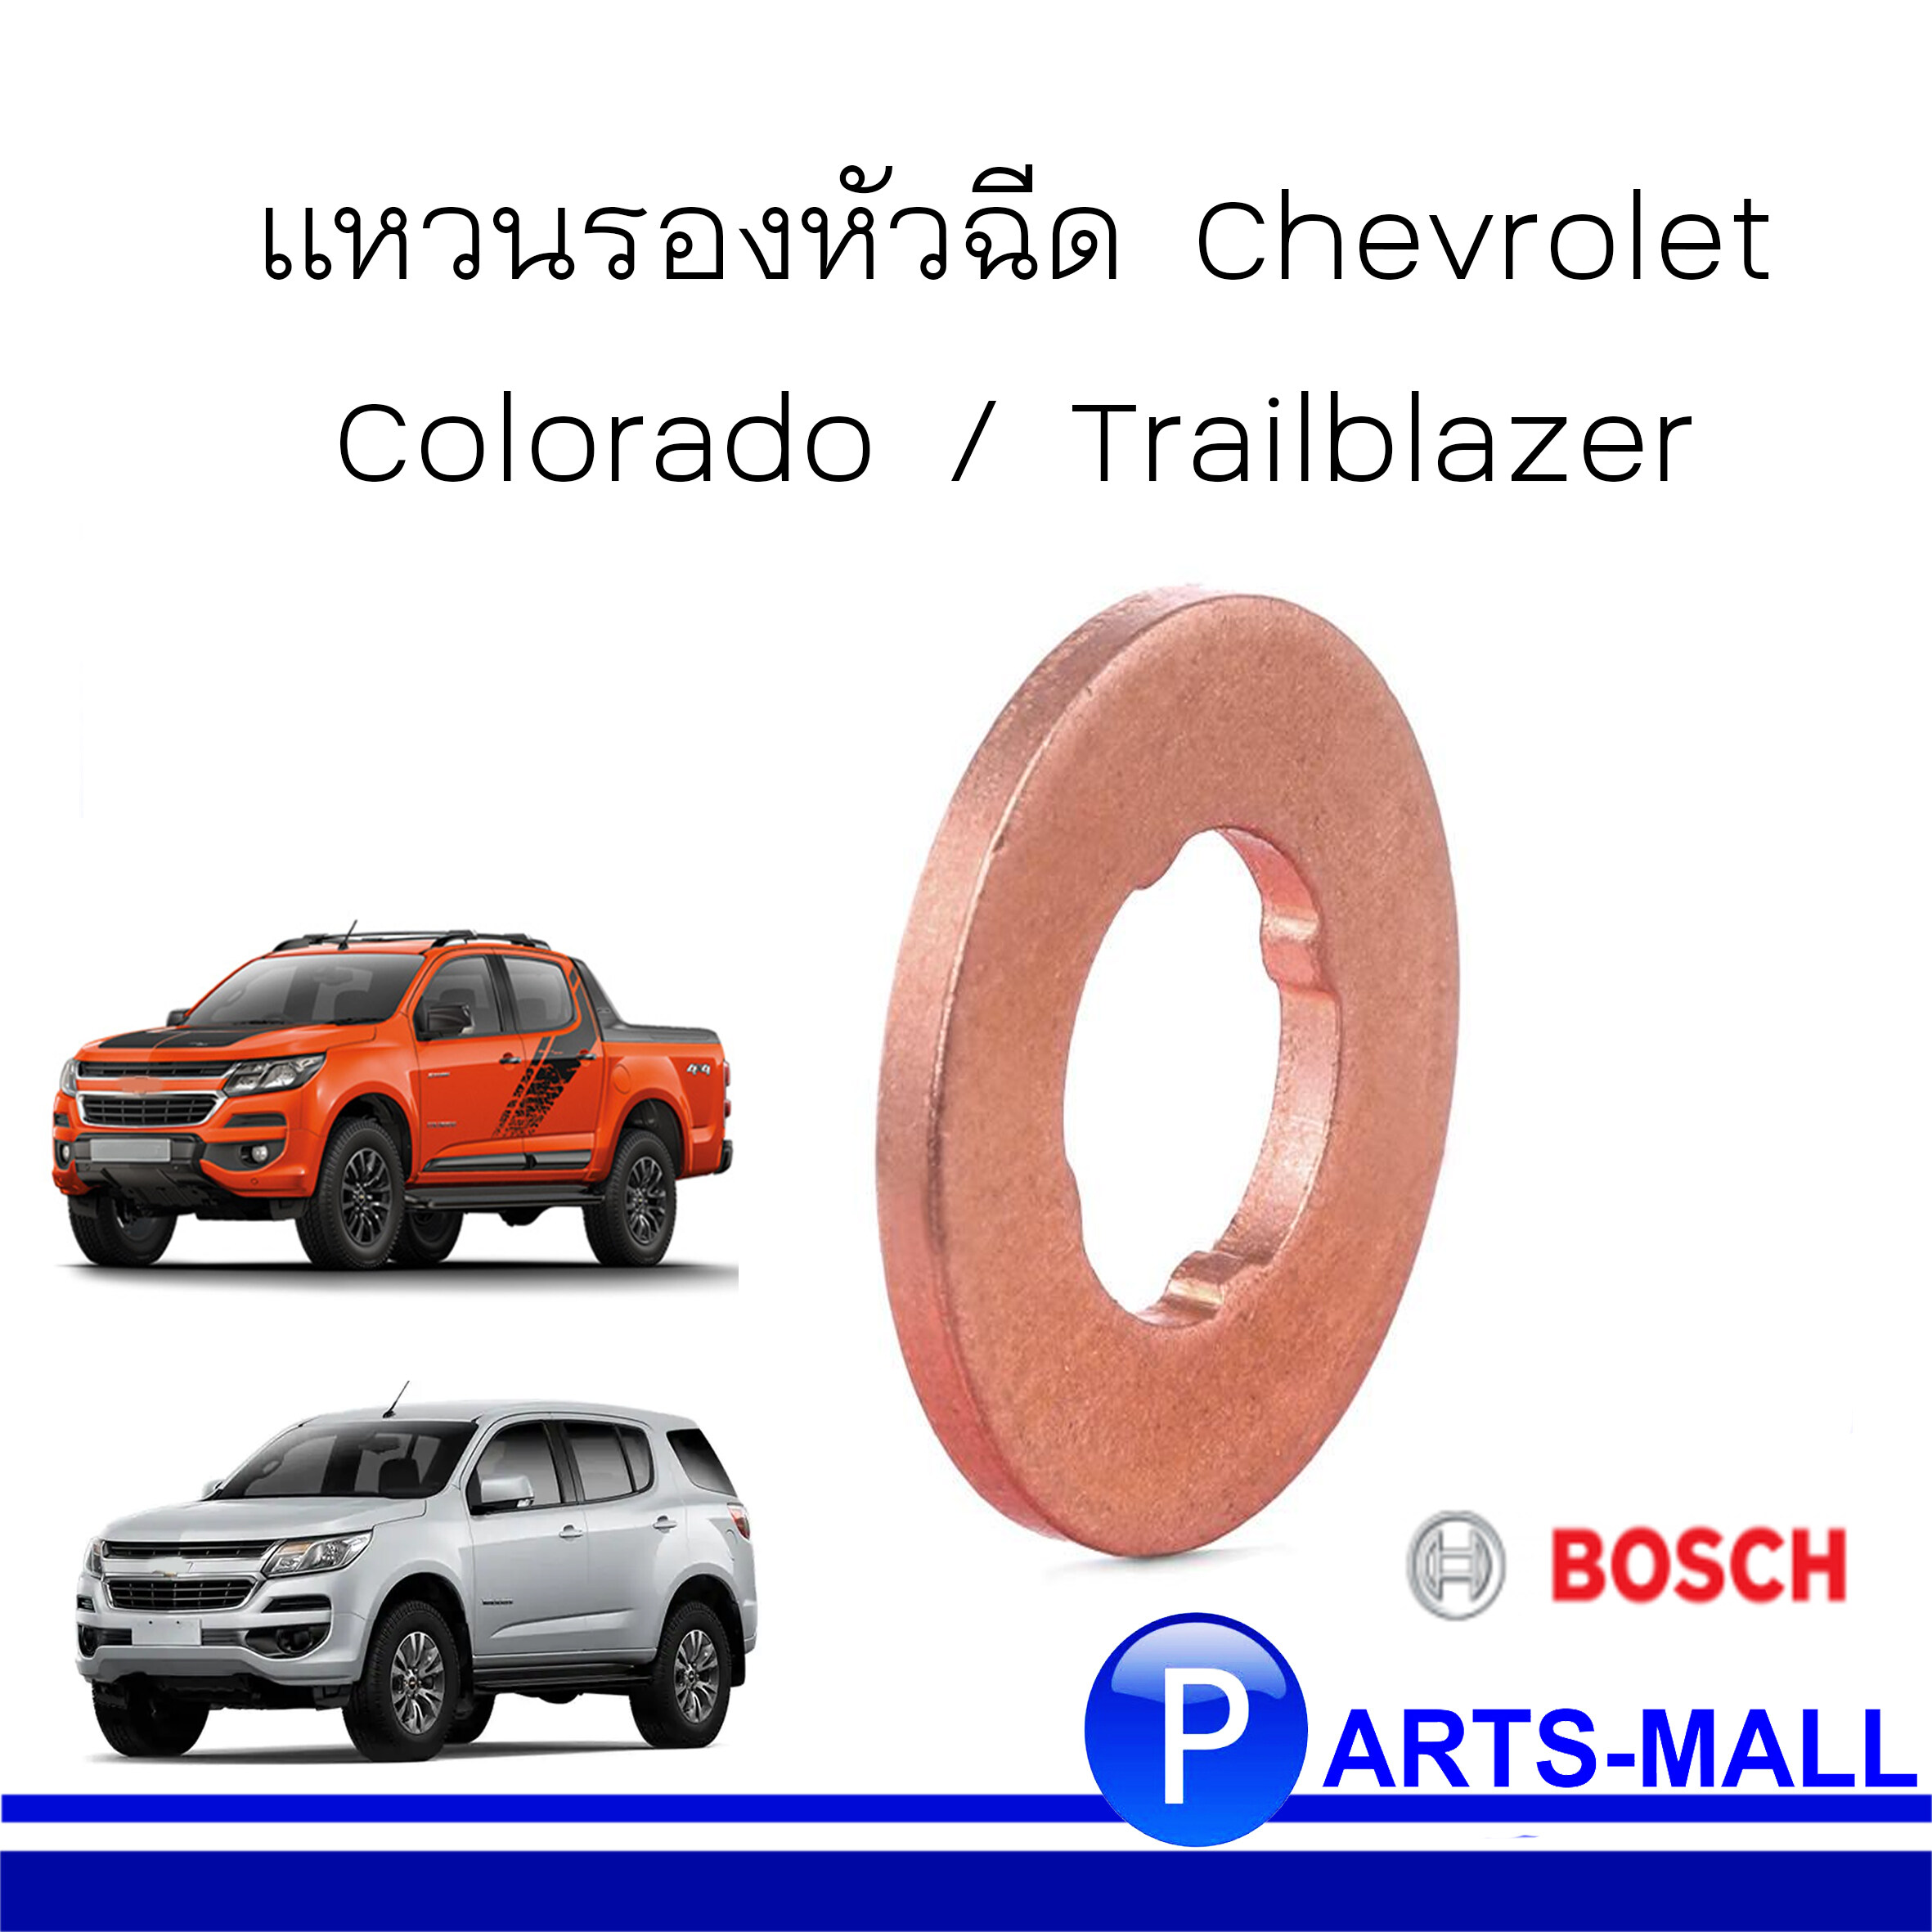 Chevrolet Colorado 2012-2013 / Trailblazer 2013 แหวนรองหัวฉีดสำหรับ เชฟโรเลต โคโลราโด้ / เทเบเลเซอร์ BOSCH ราคาต่อ 1ชิ้น